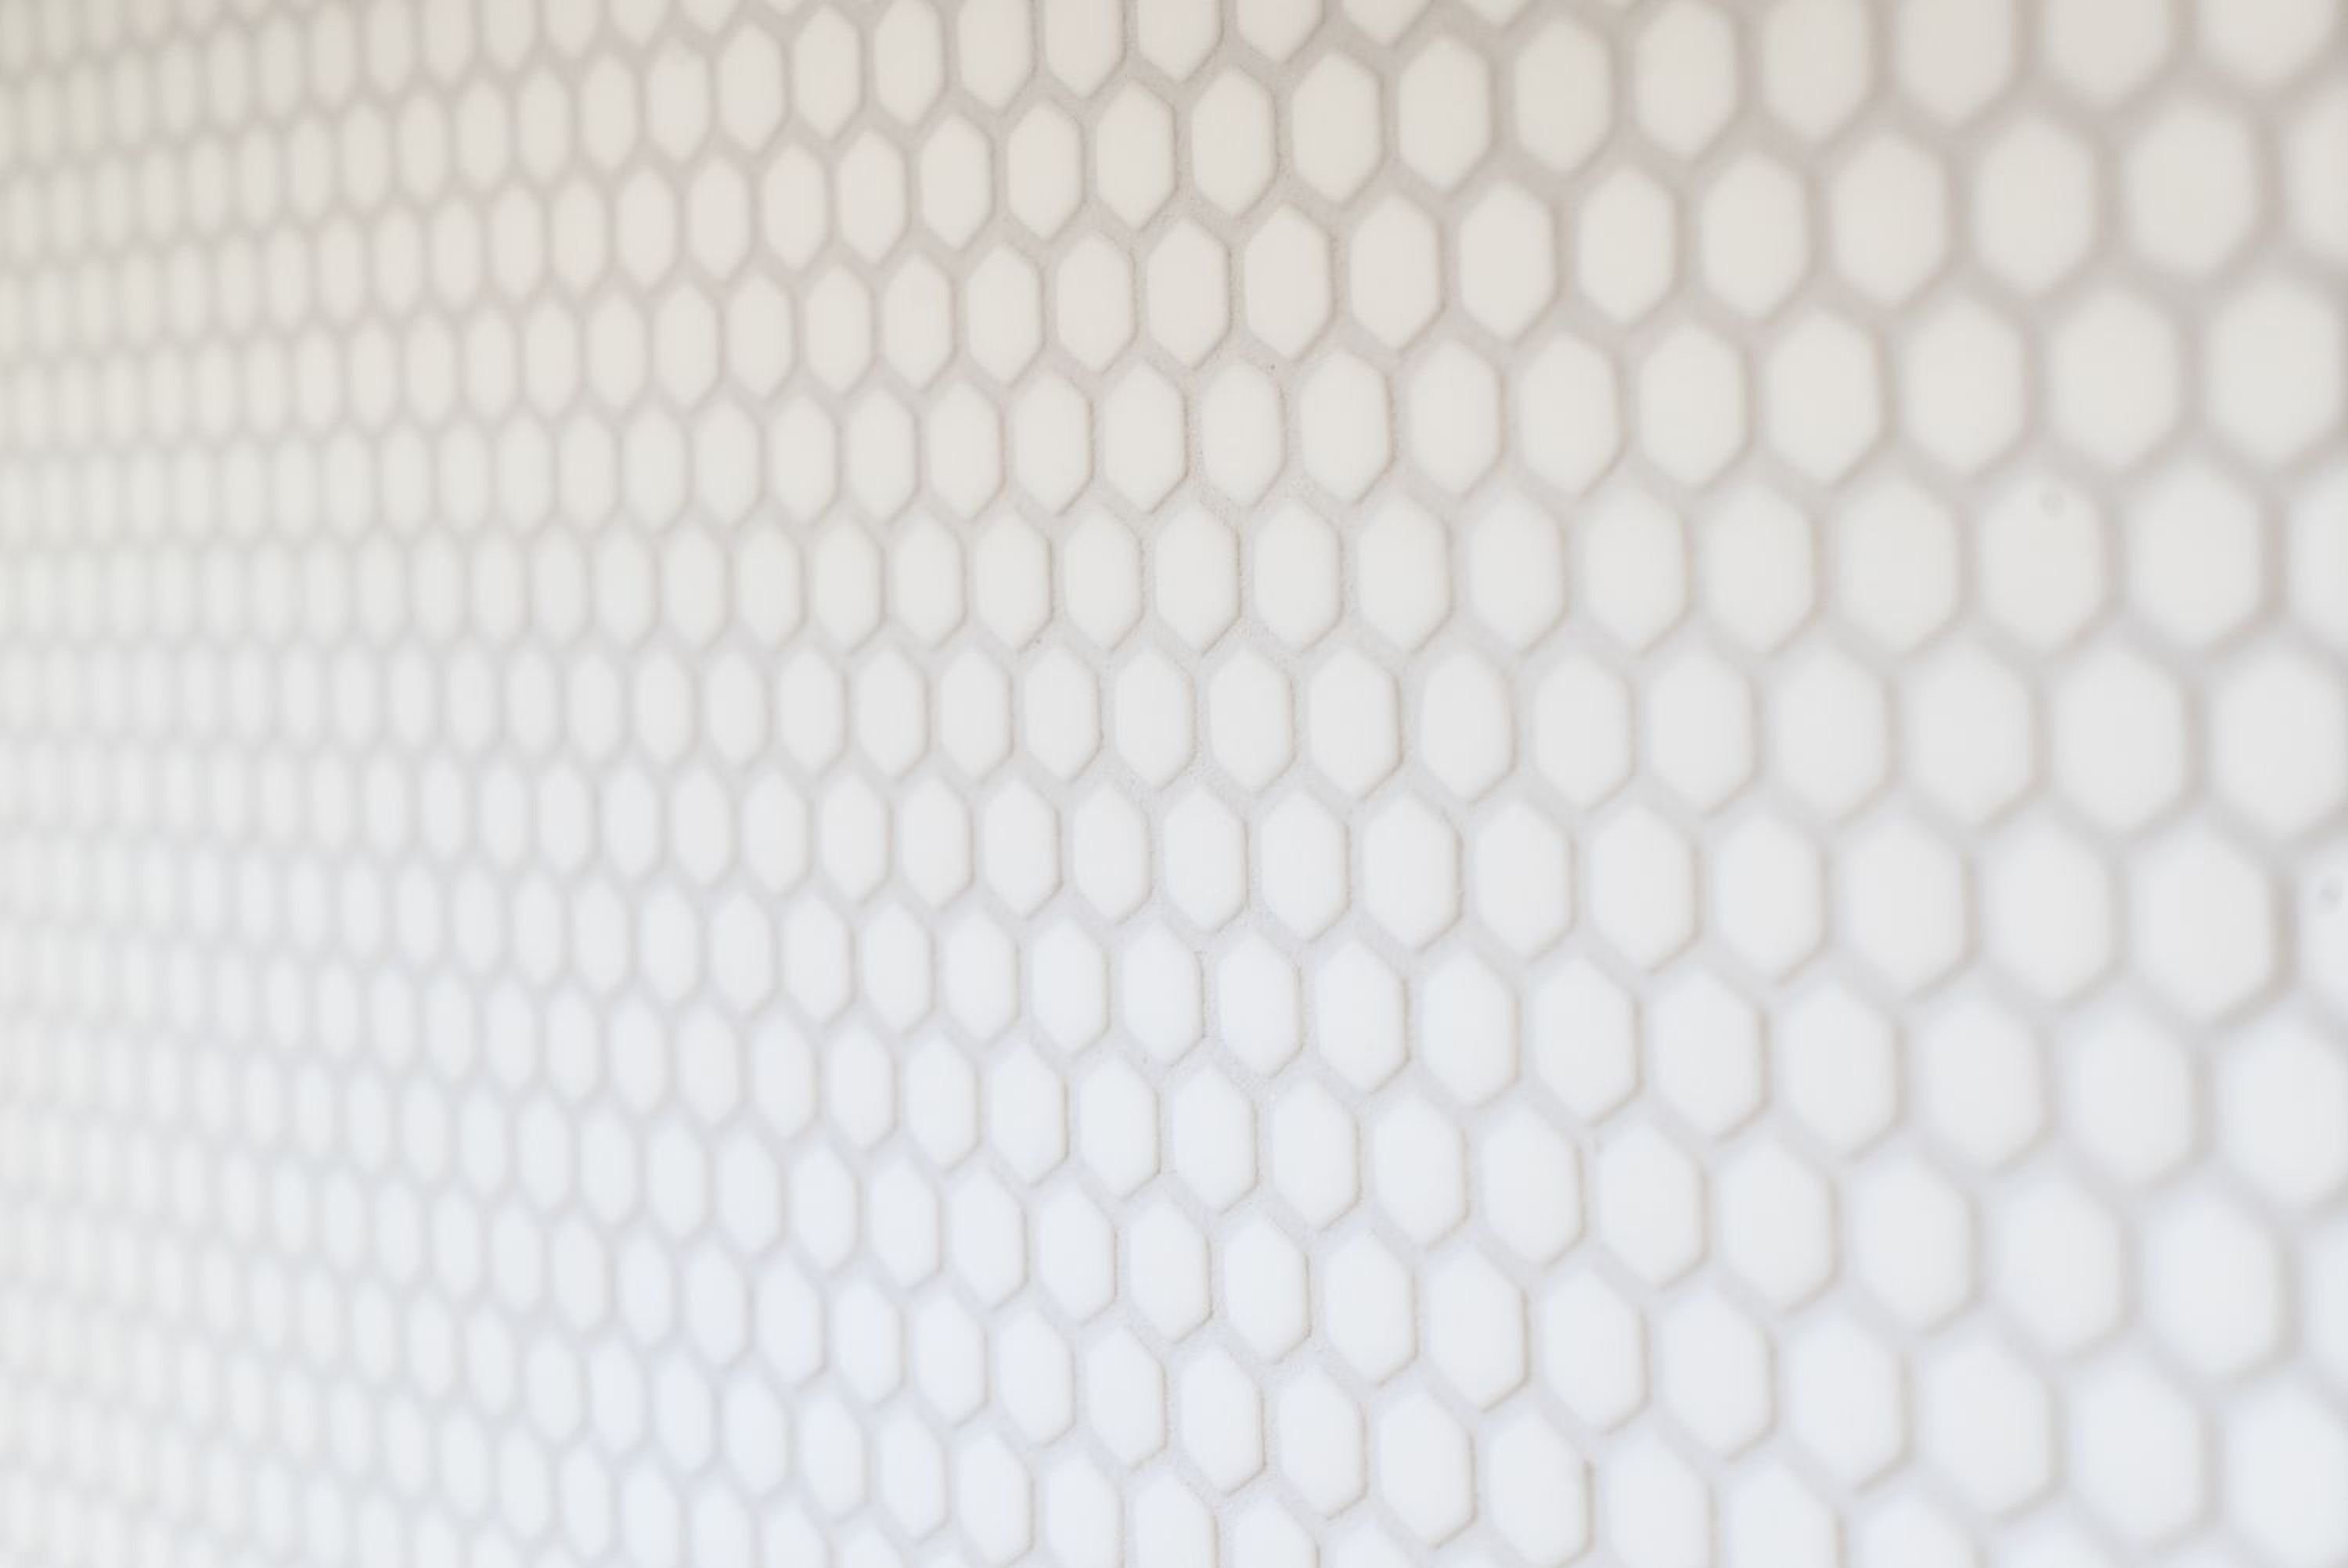 Glasmosaik Nachhaltiger Hexagon Recycling Wandbelag Mosani Fliesenspiegel Mosaikfliesen